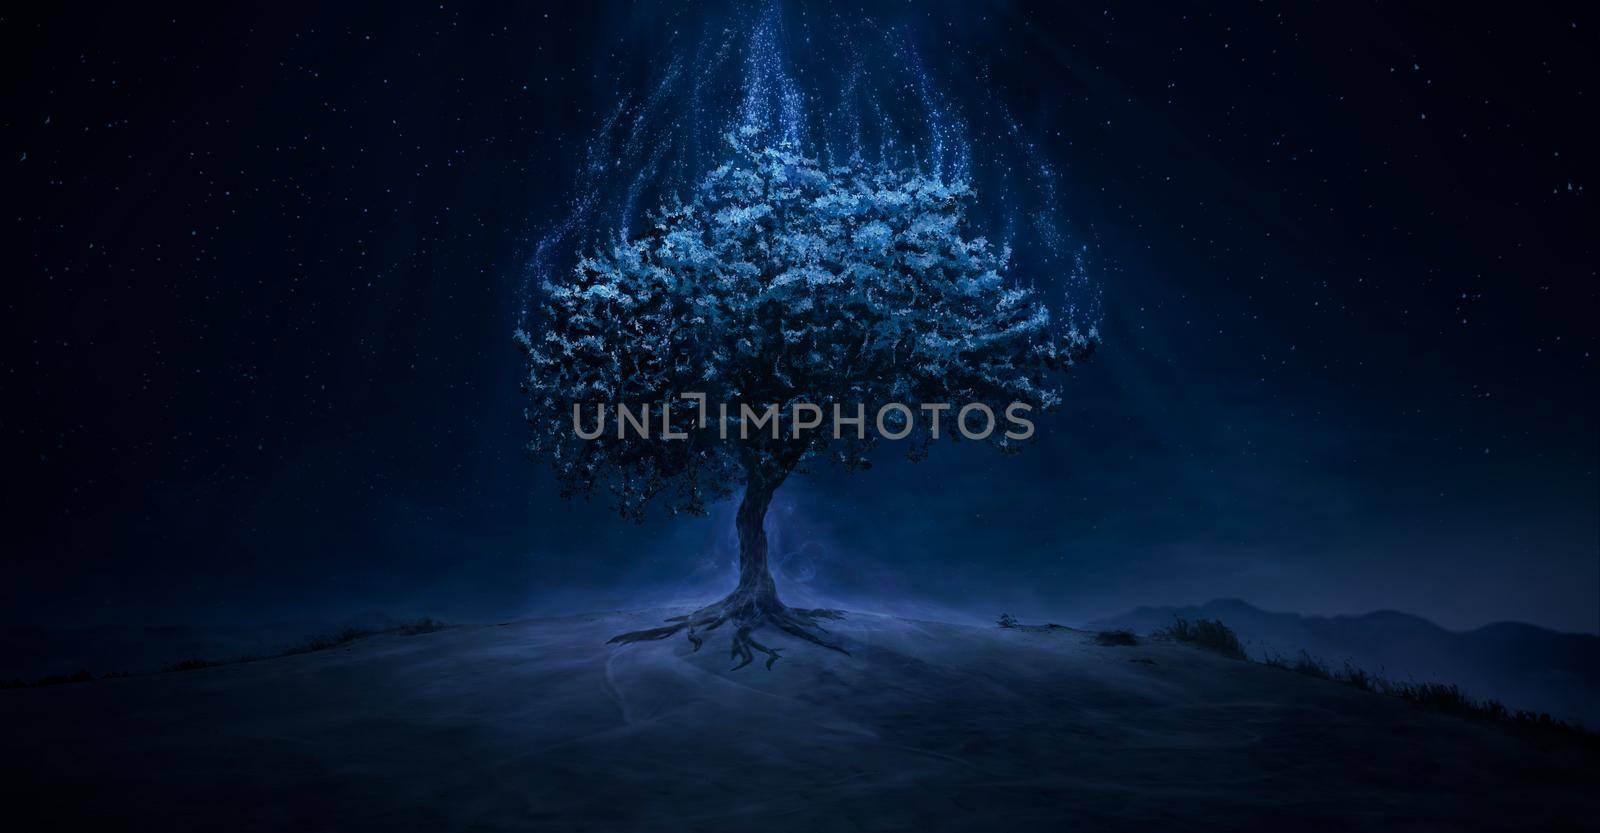 Magic tree spreading magic on the hilltop by igor_stramyk